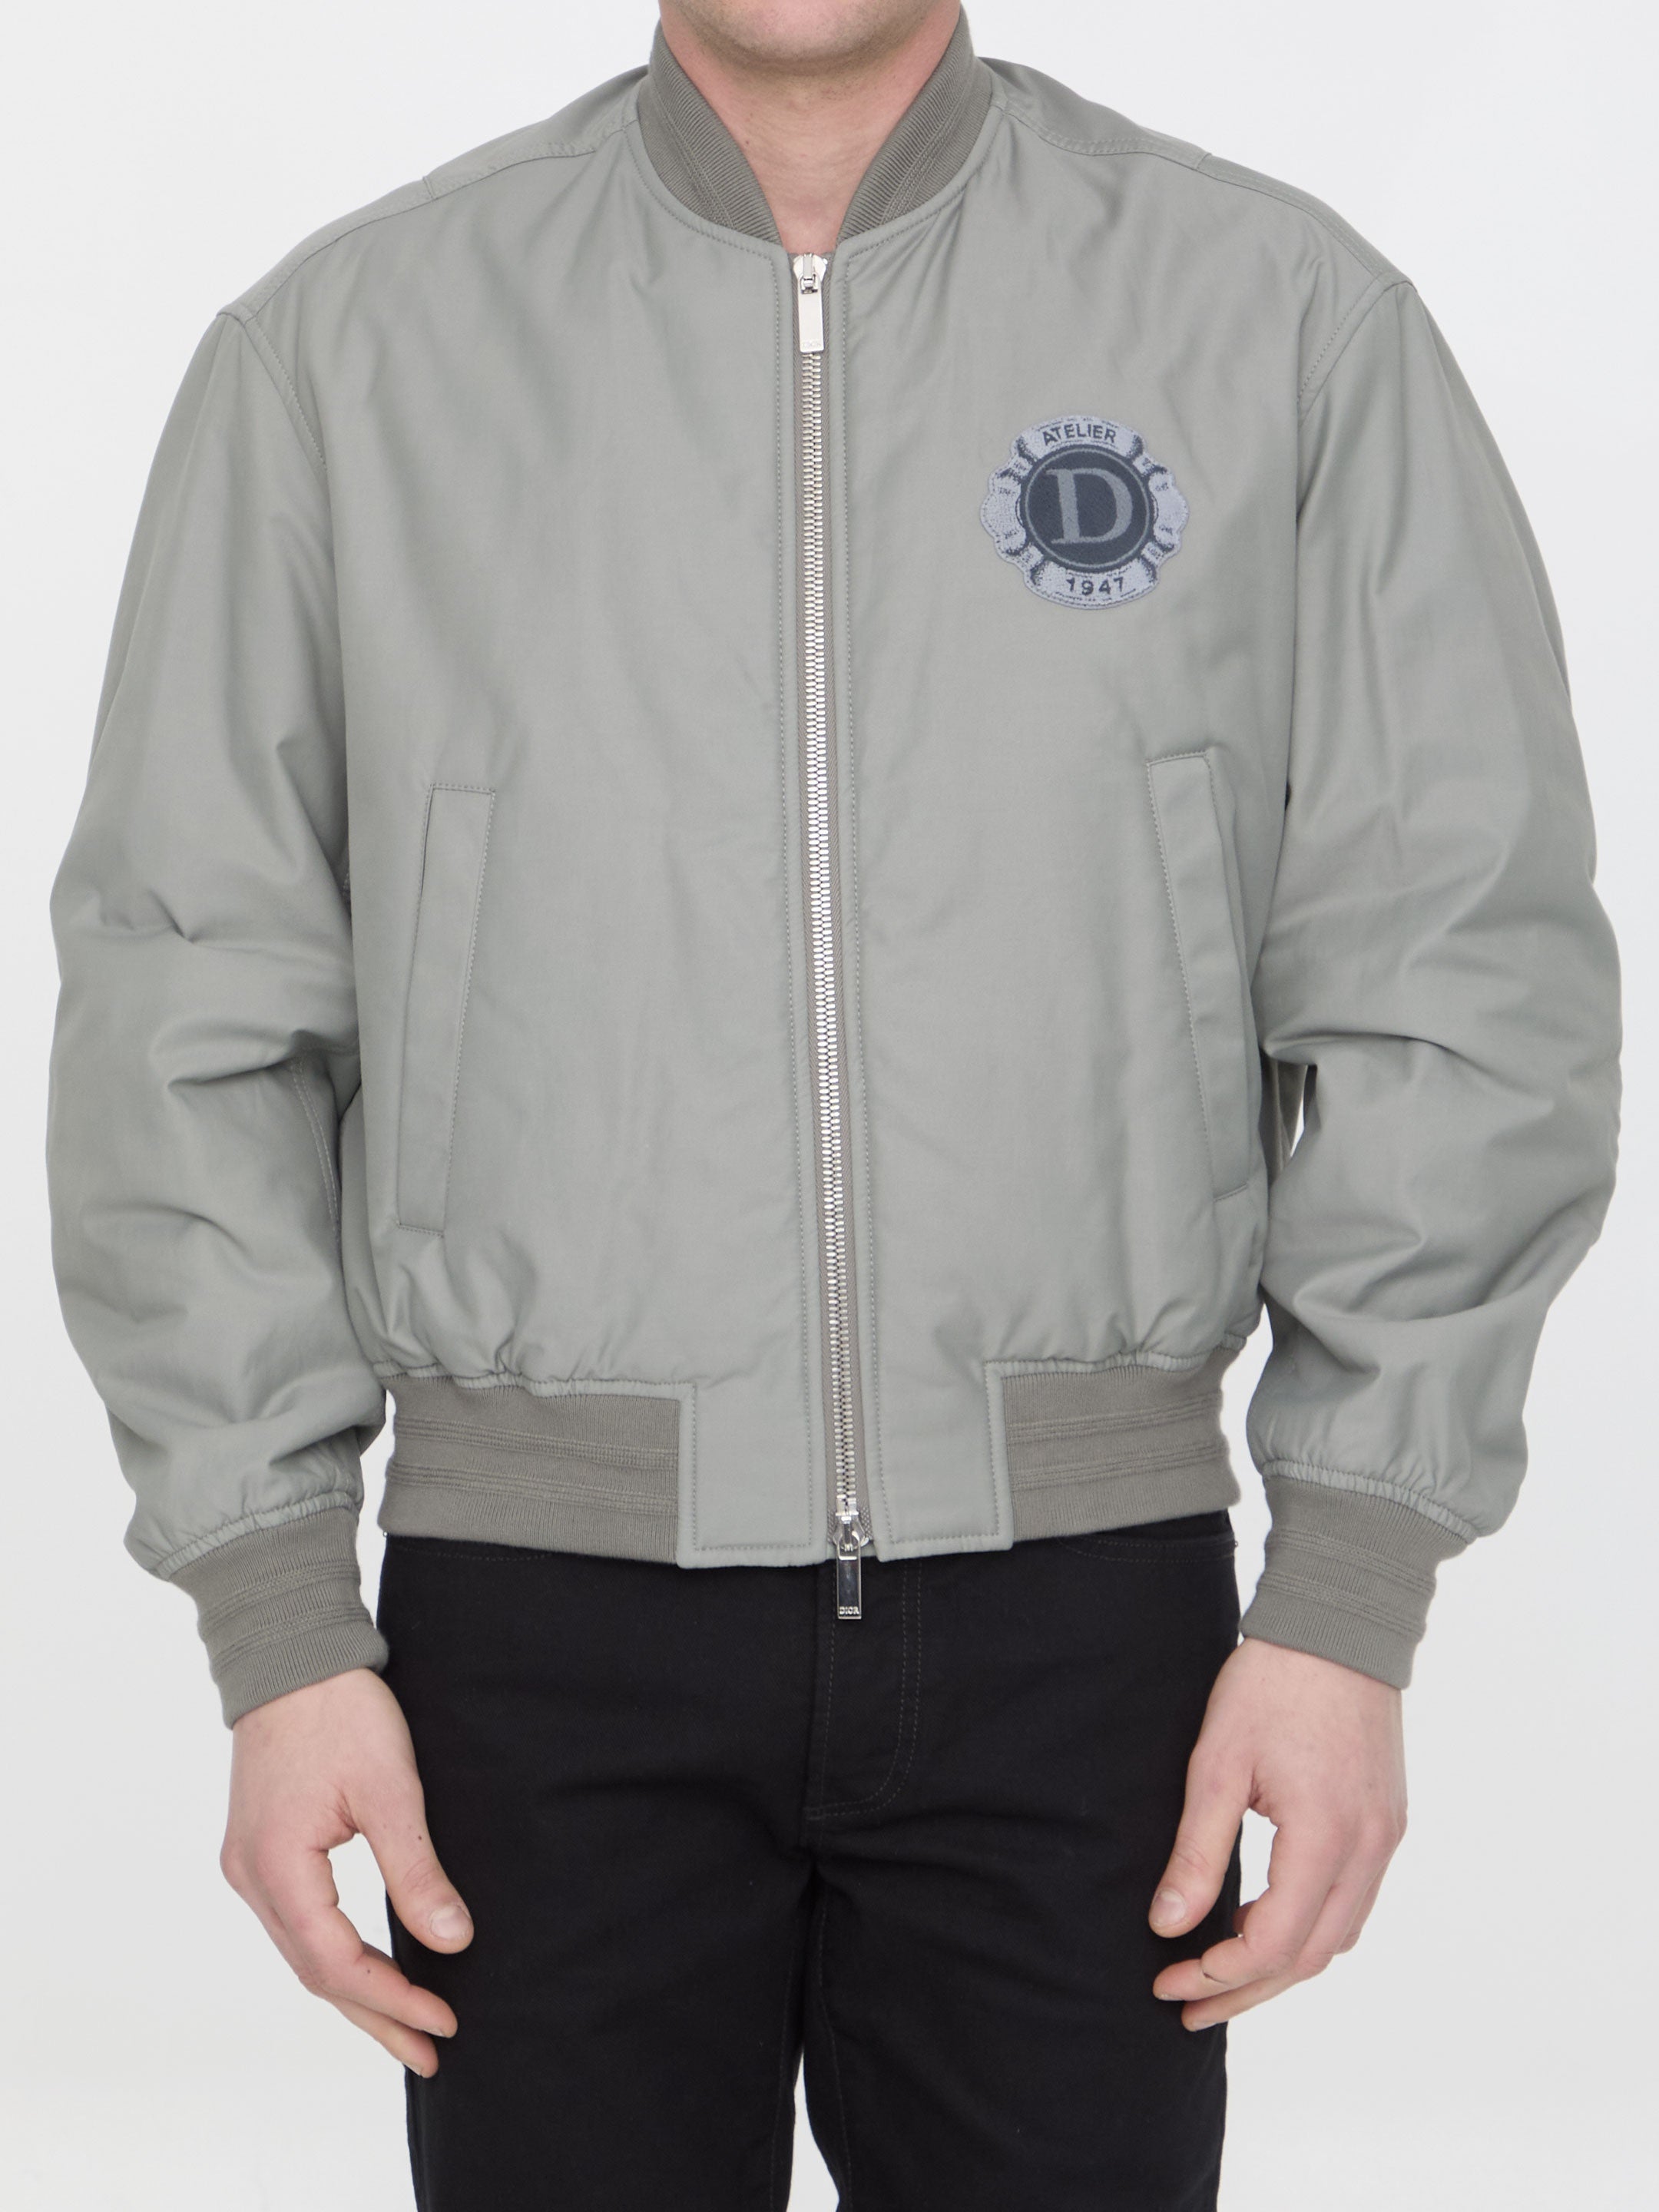 DIOR-HOMME-OUTLET-SALE-Cotton-blend-bomber-jacket-Jacken-Mantel-48-GREY-ARCHIVE-COLLECTION.jpg